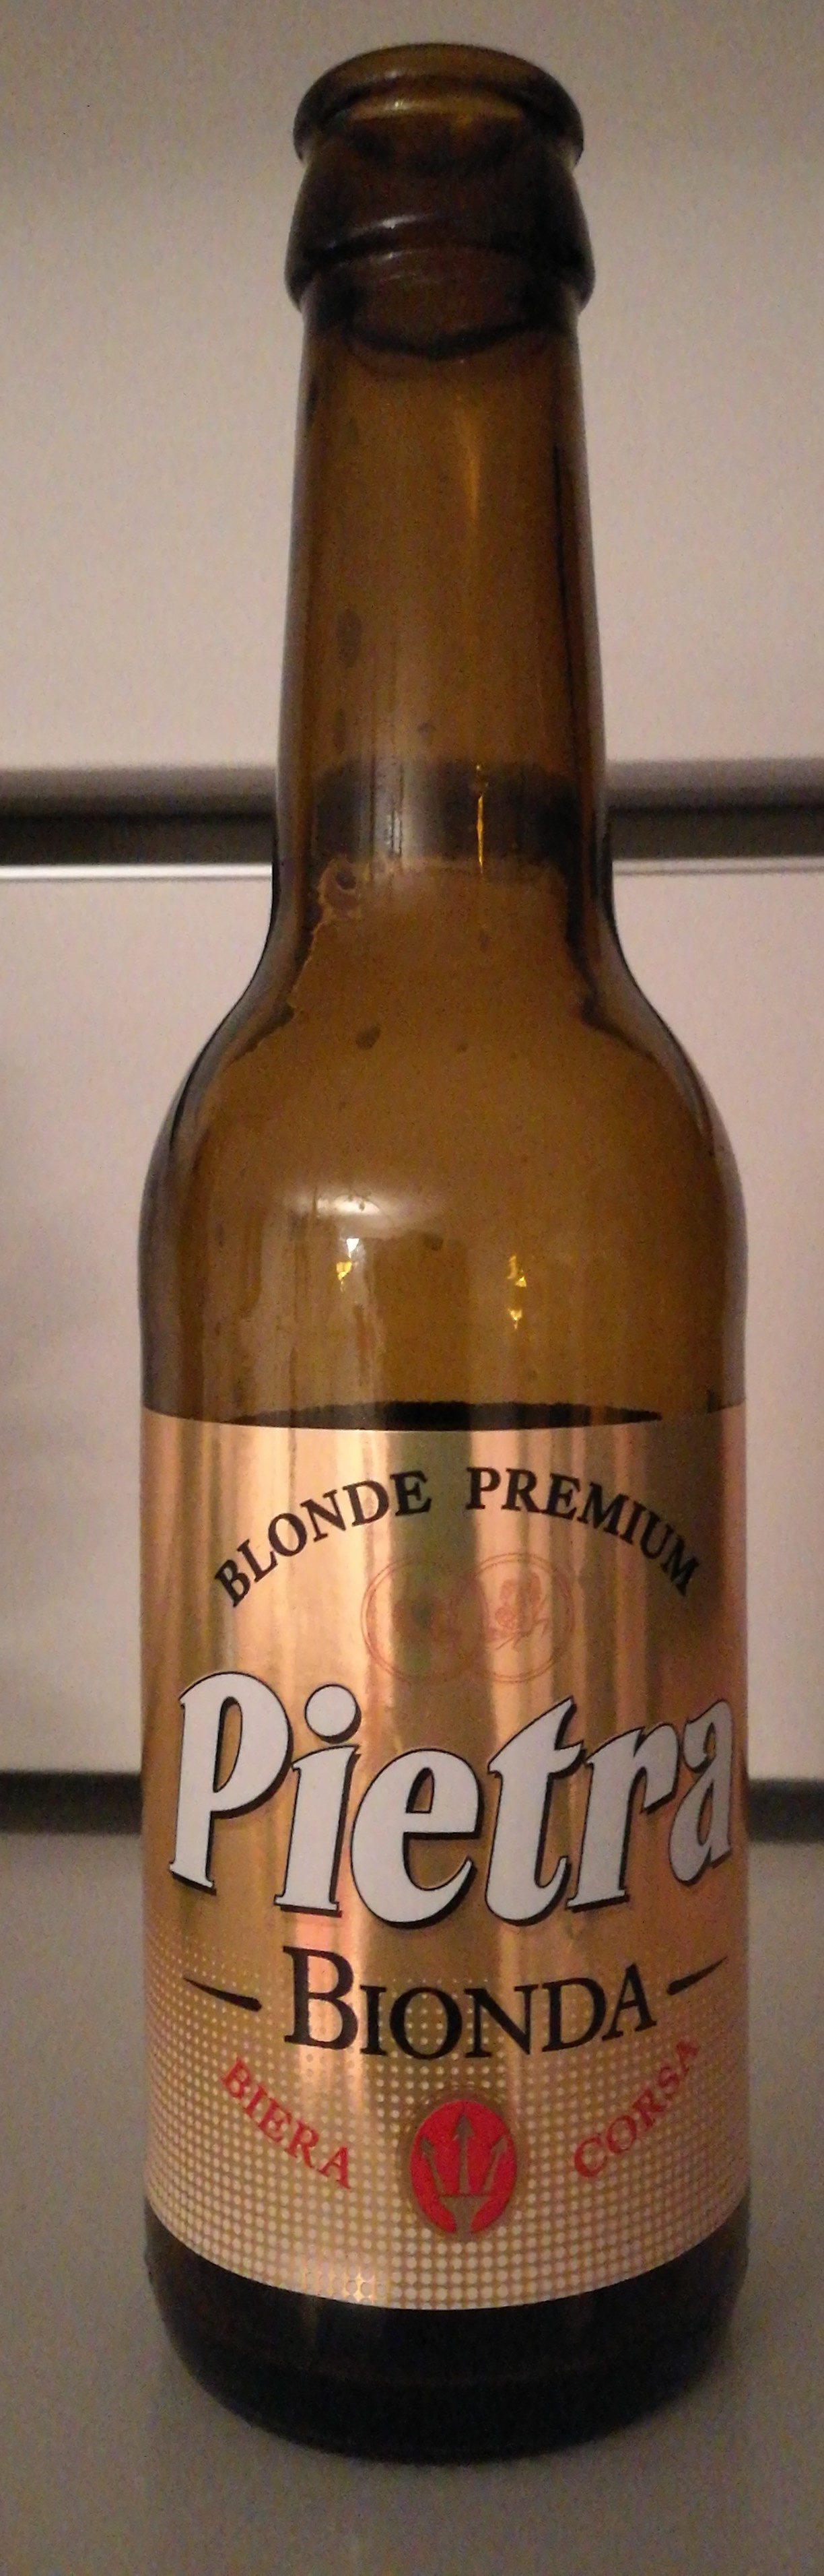 Pierra bionda - Product - fr